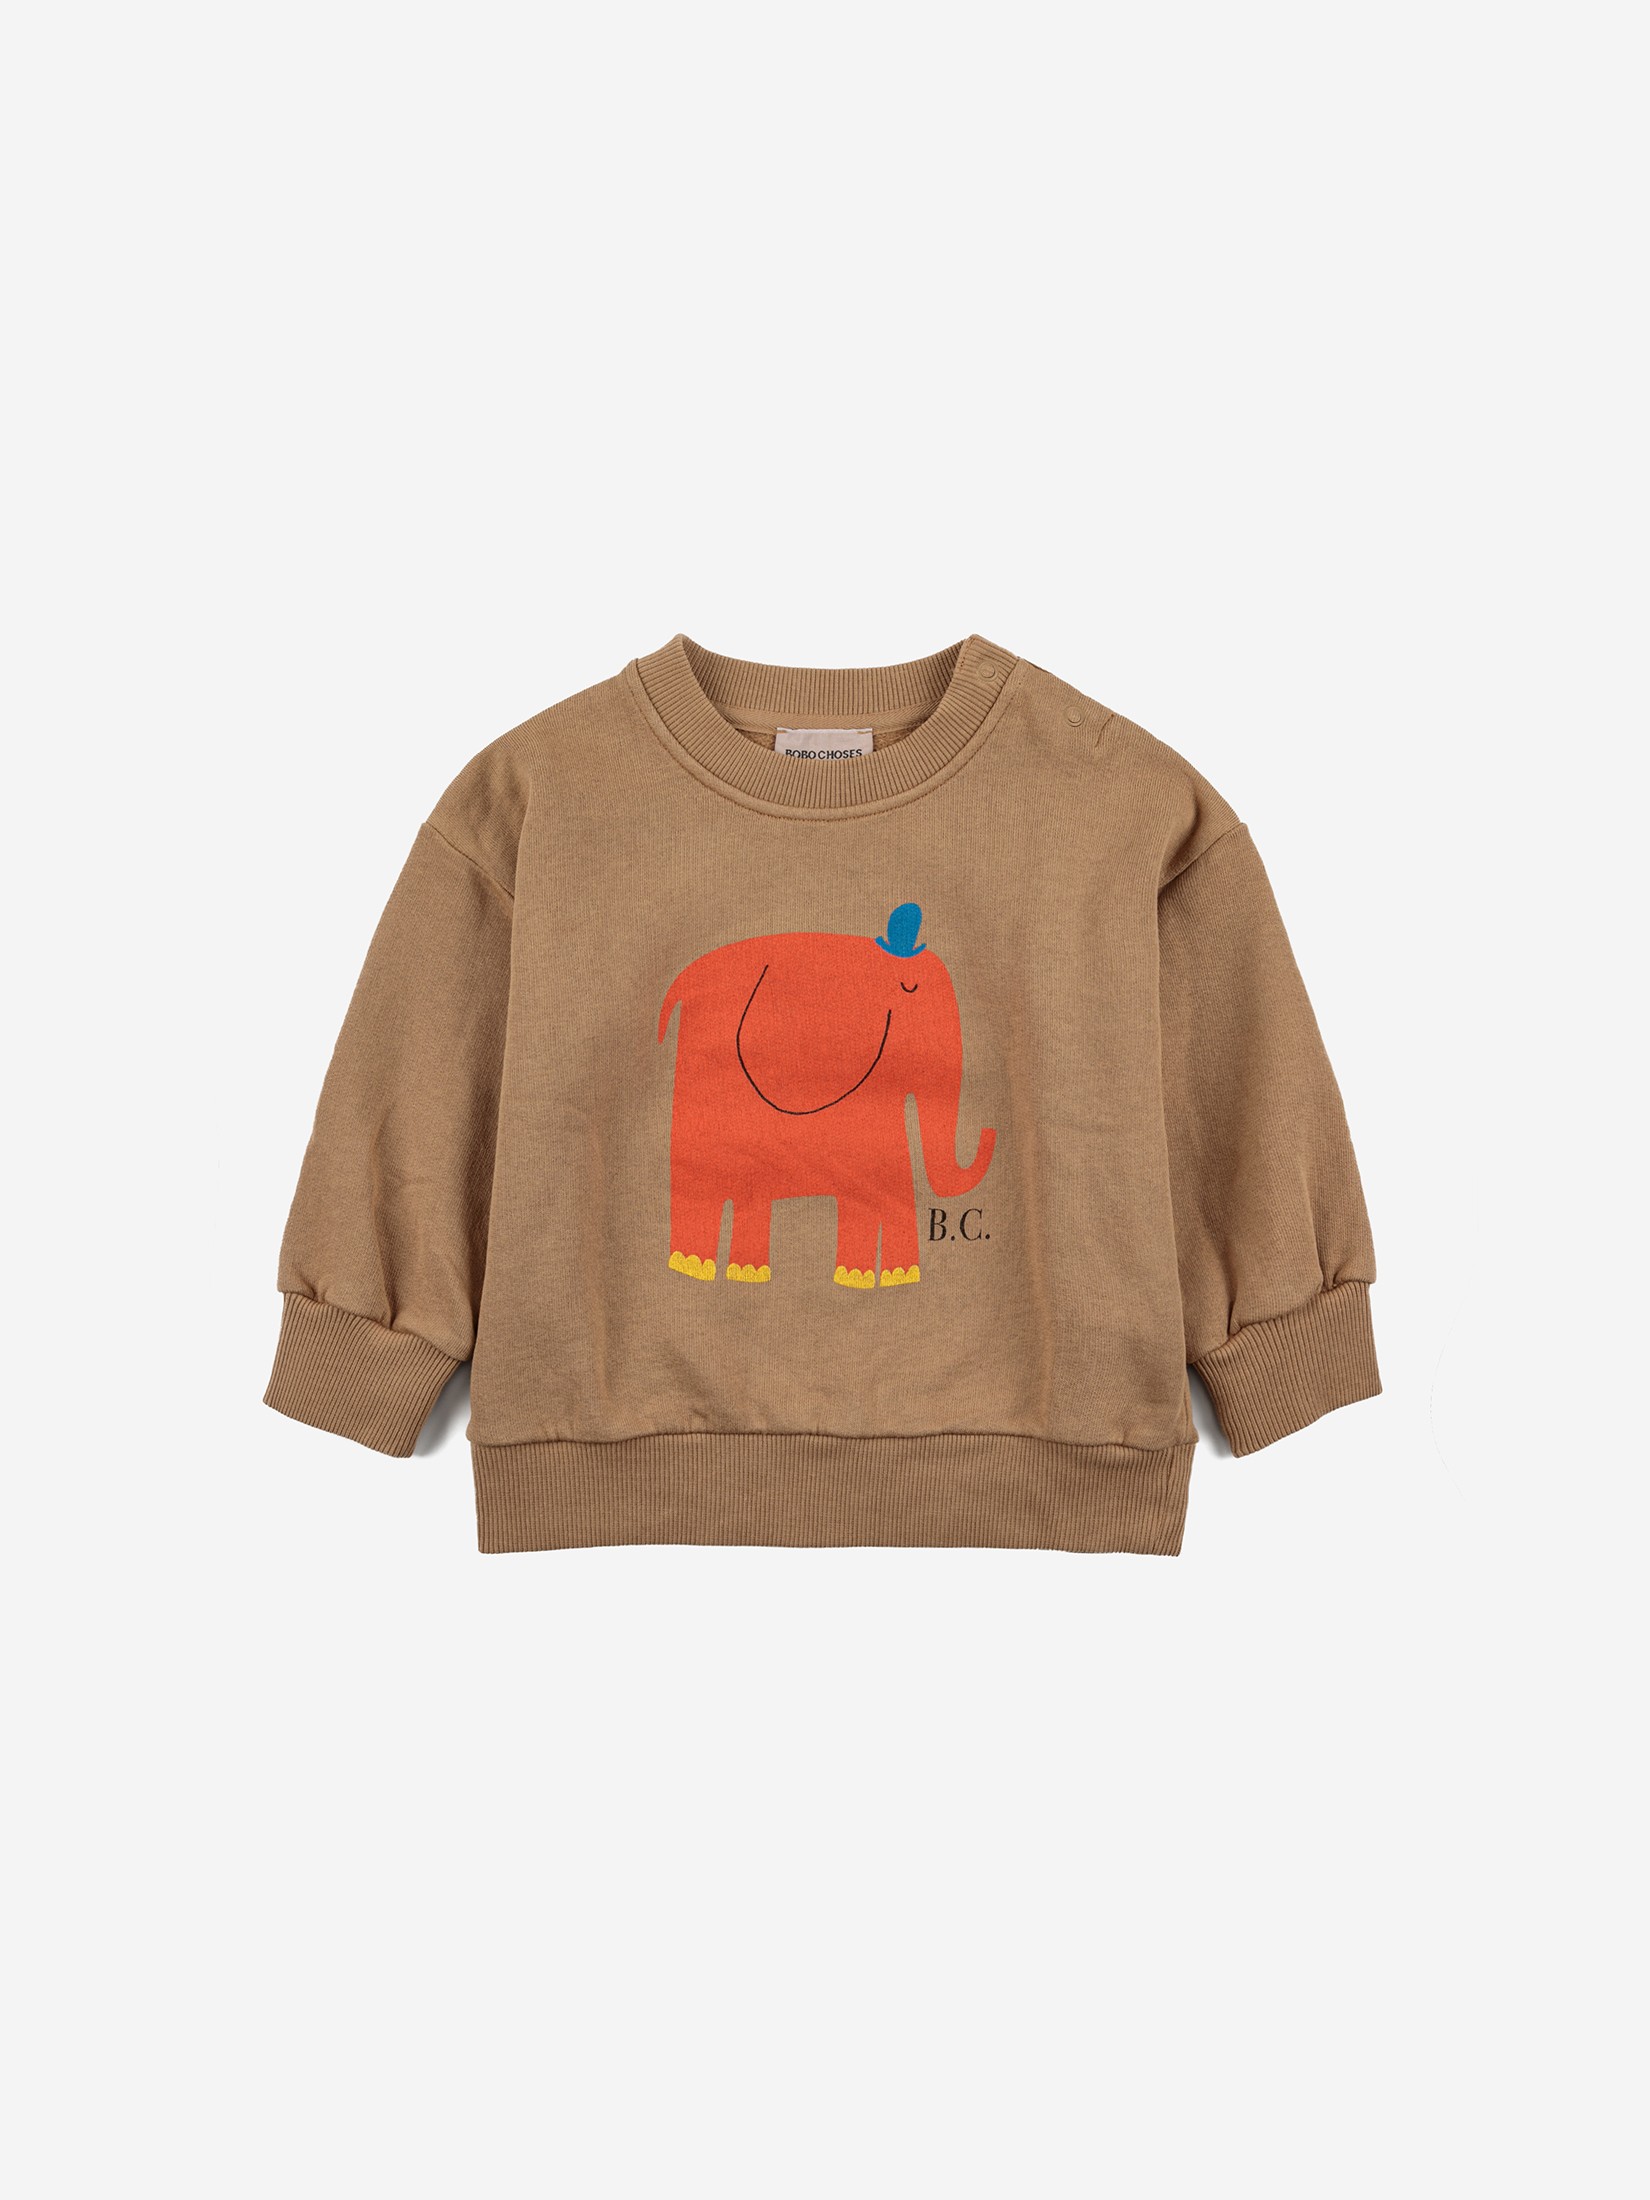 Baby The Elephant sweatshirt|Bobo Choses | Abu Dhabi